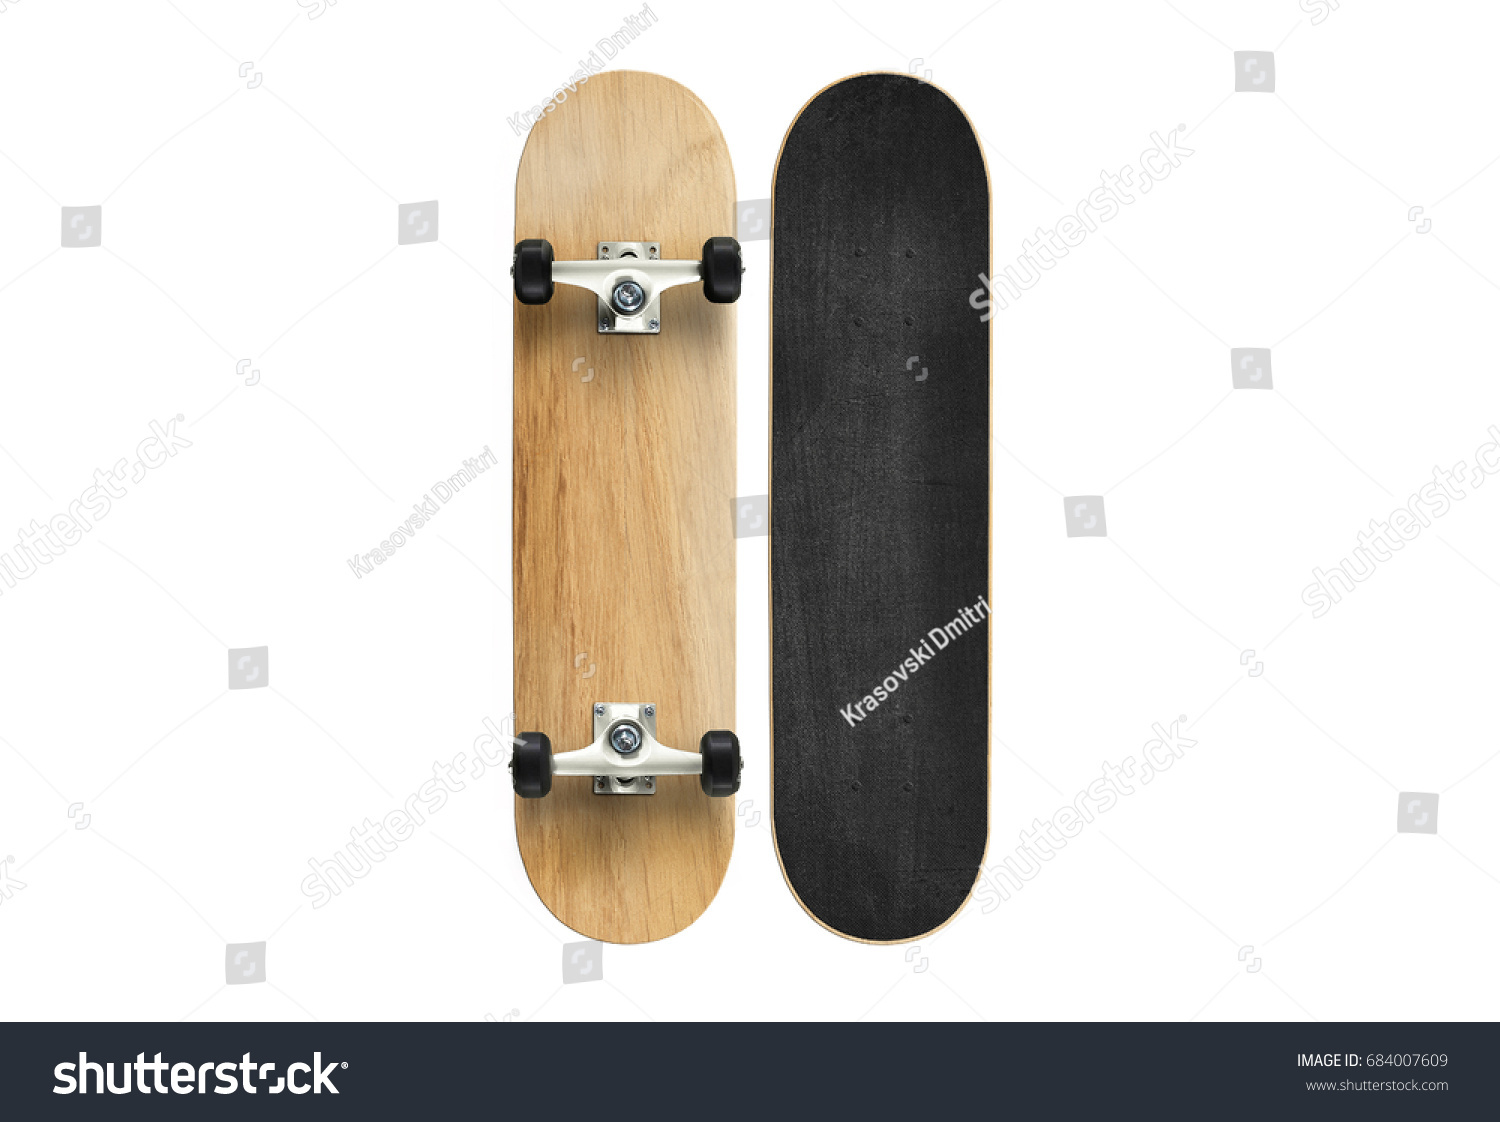 Skateboard isolated on white background. Sport #684007609